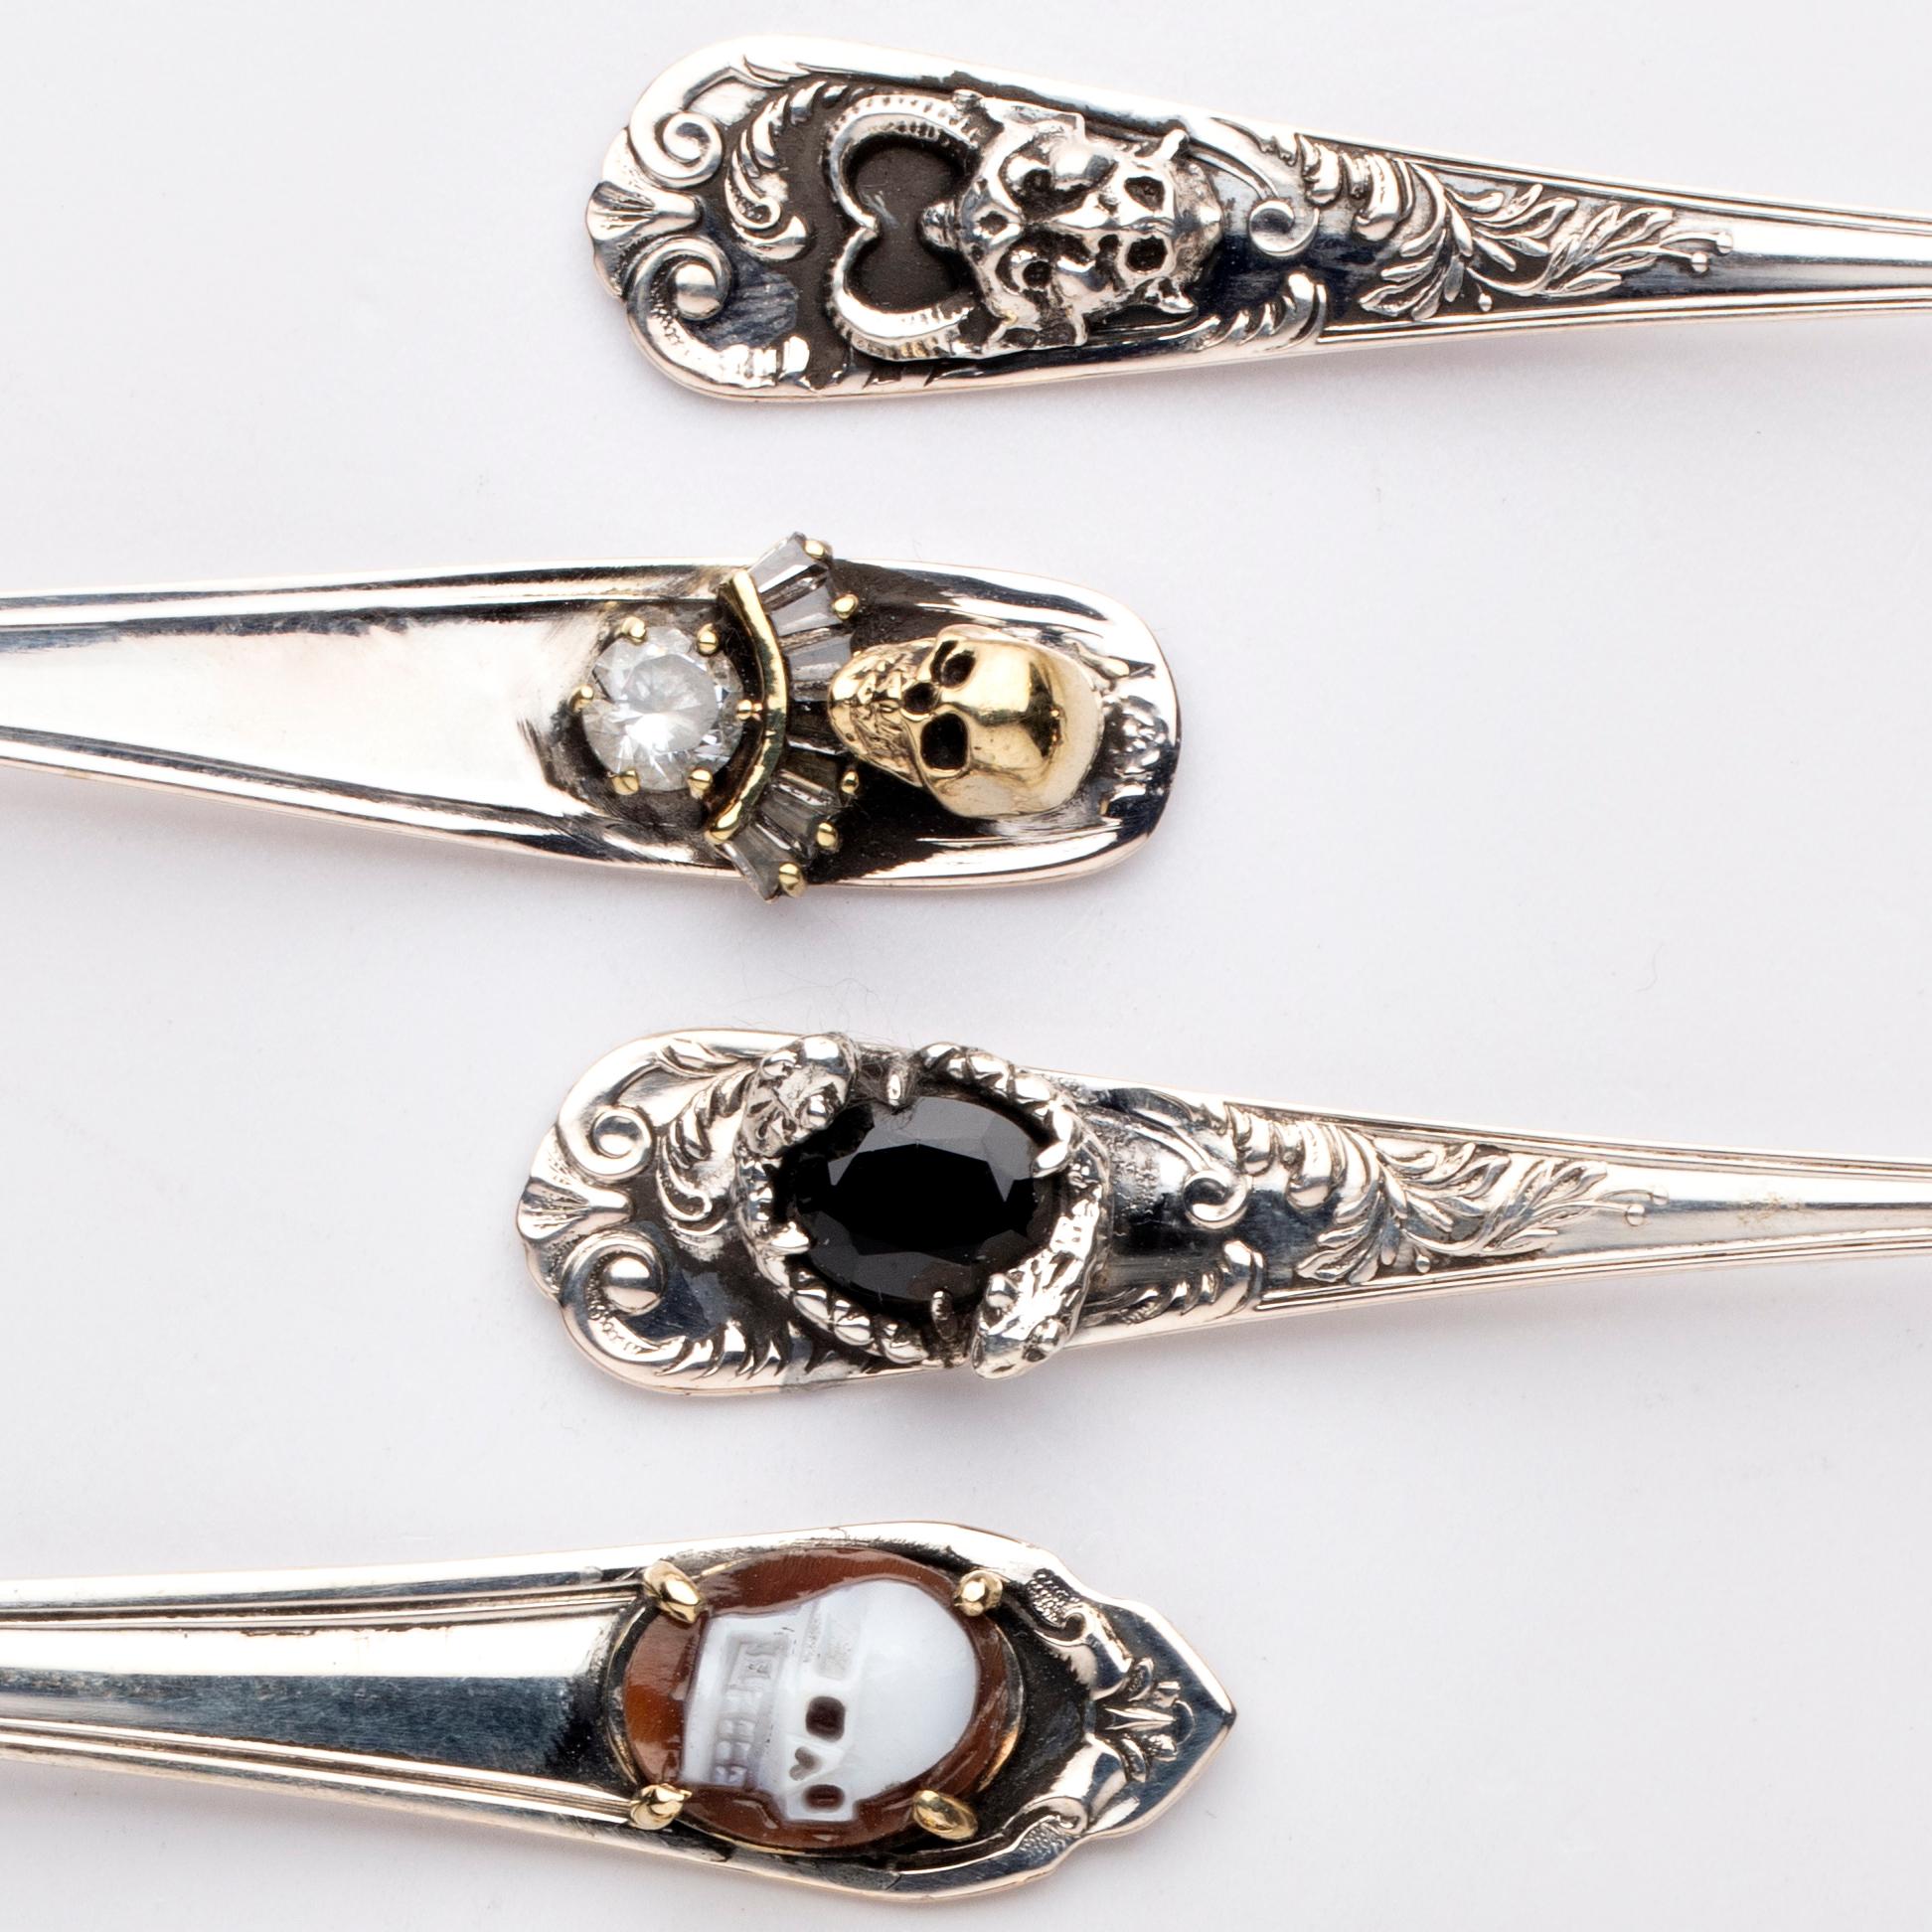 Welded Fashion Silver Spoon Set from Iosselliani For Sale